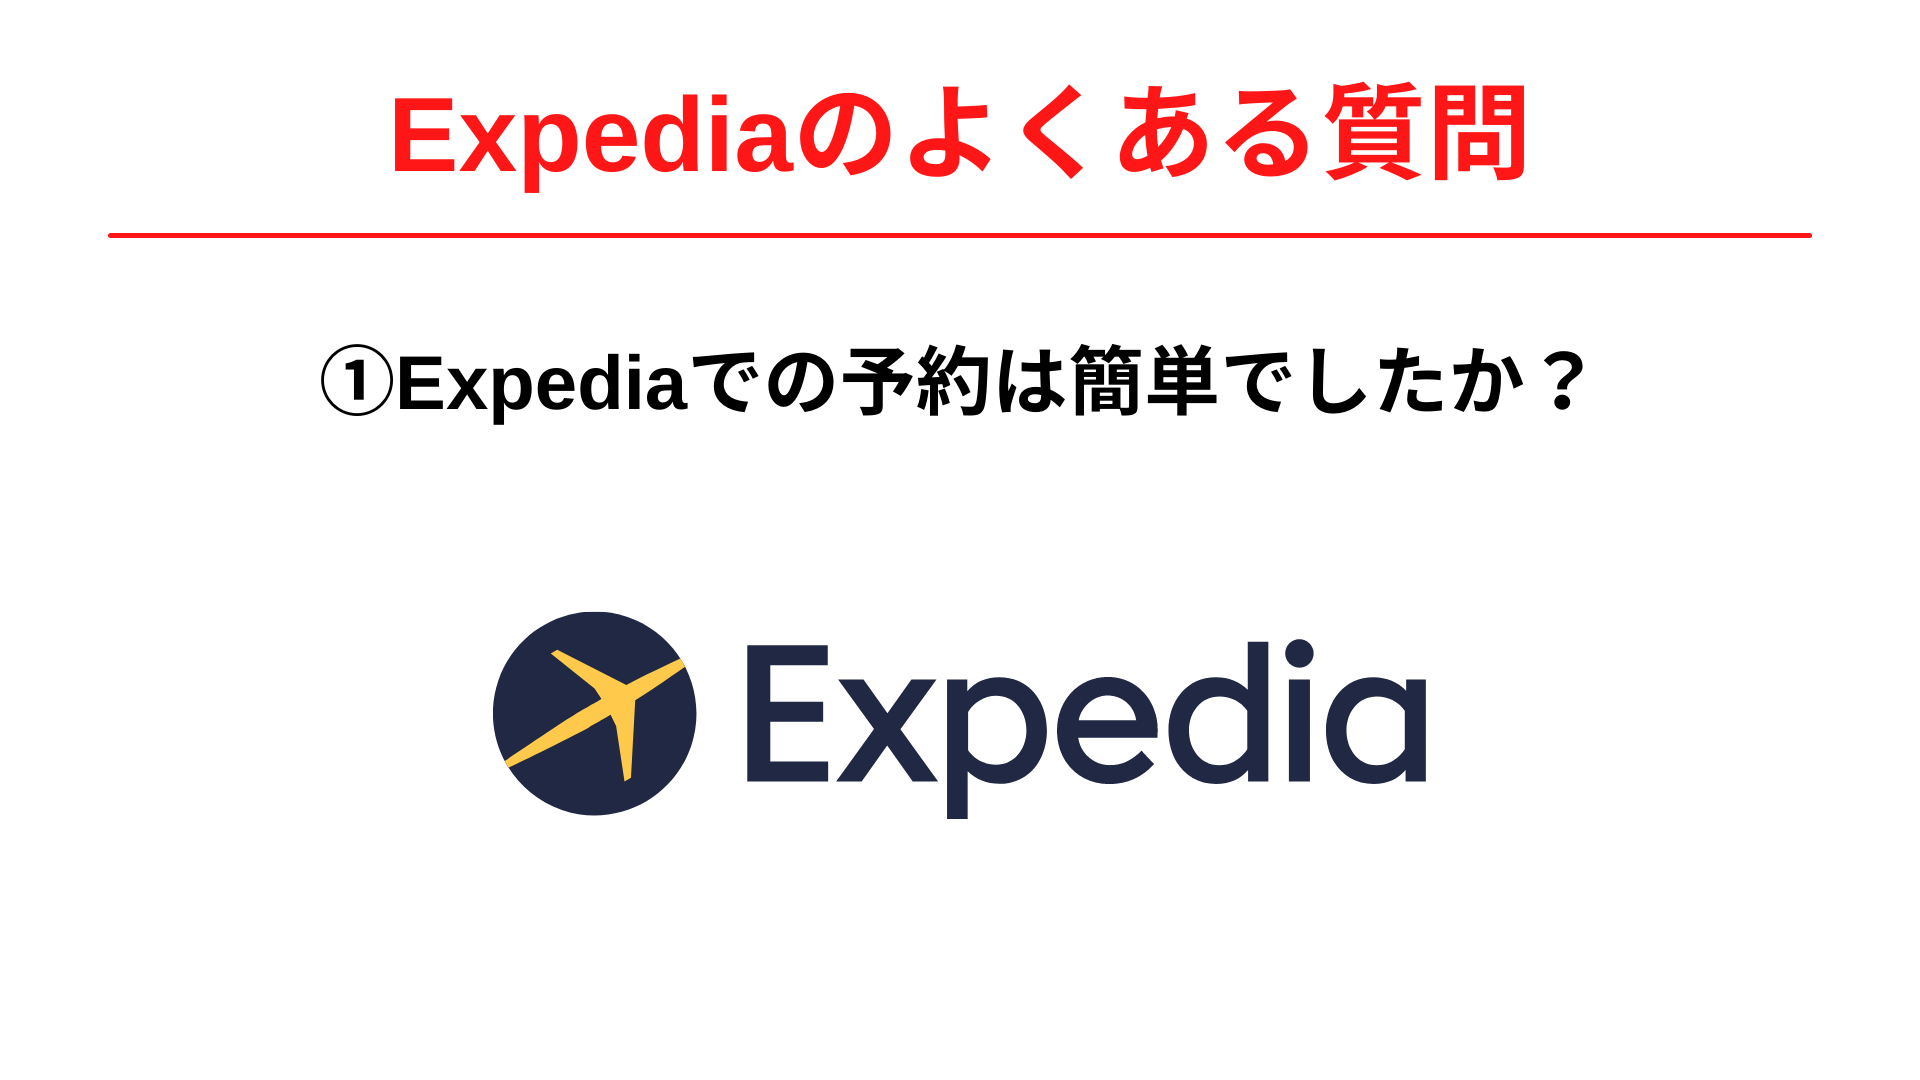 Expedia(エクスペディア)での予約は簡単でしたか？